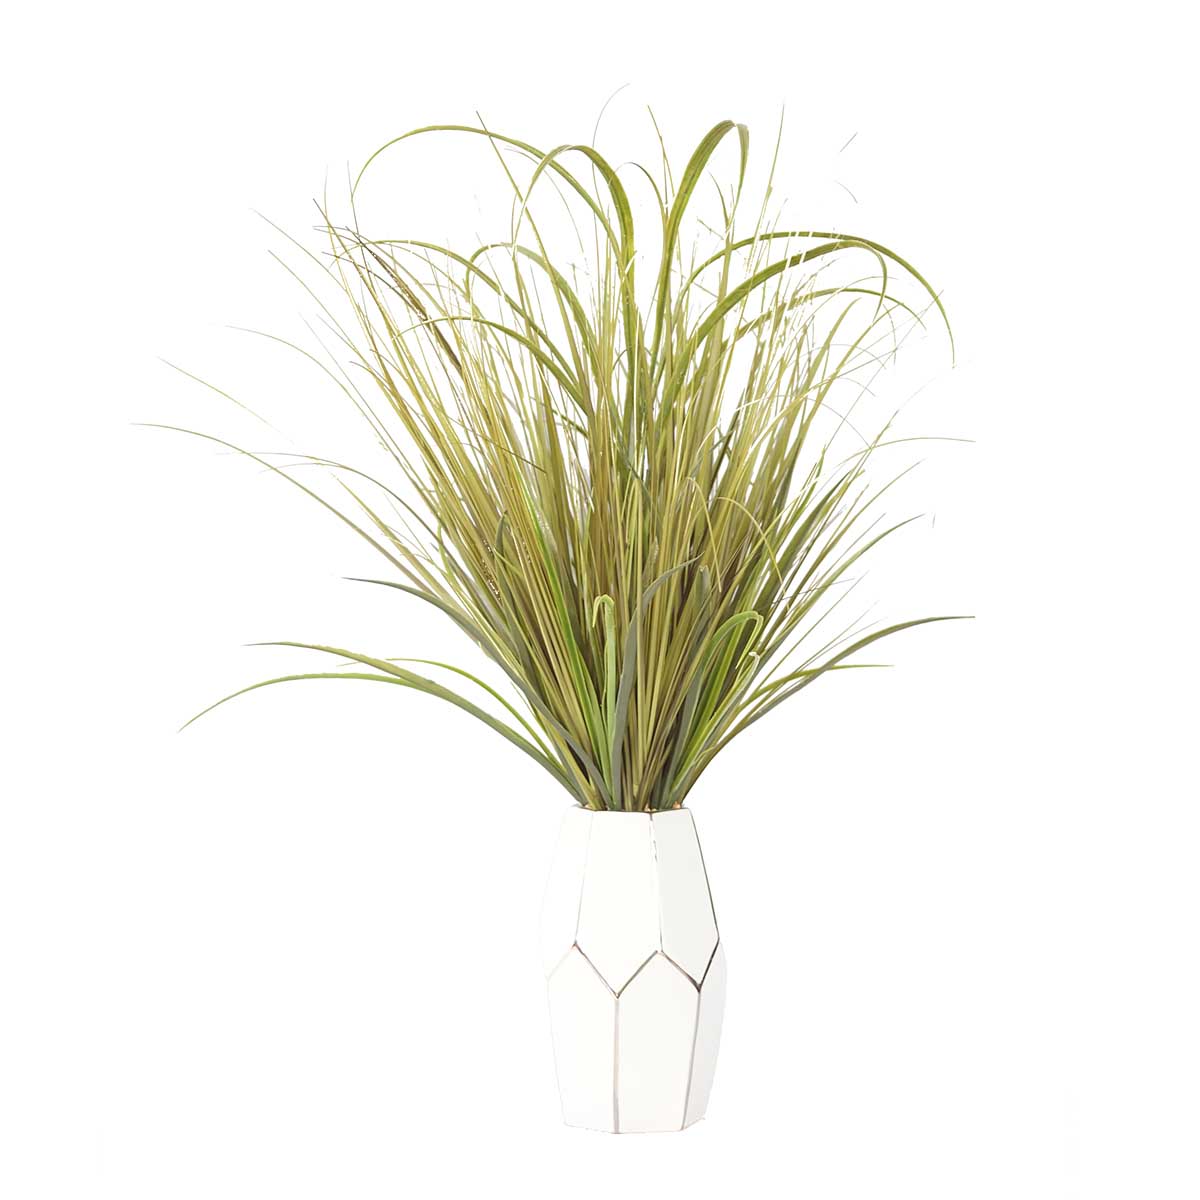 Vha102480 Onion Grass In Ceramic Vase